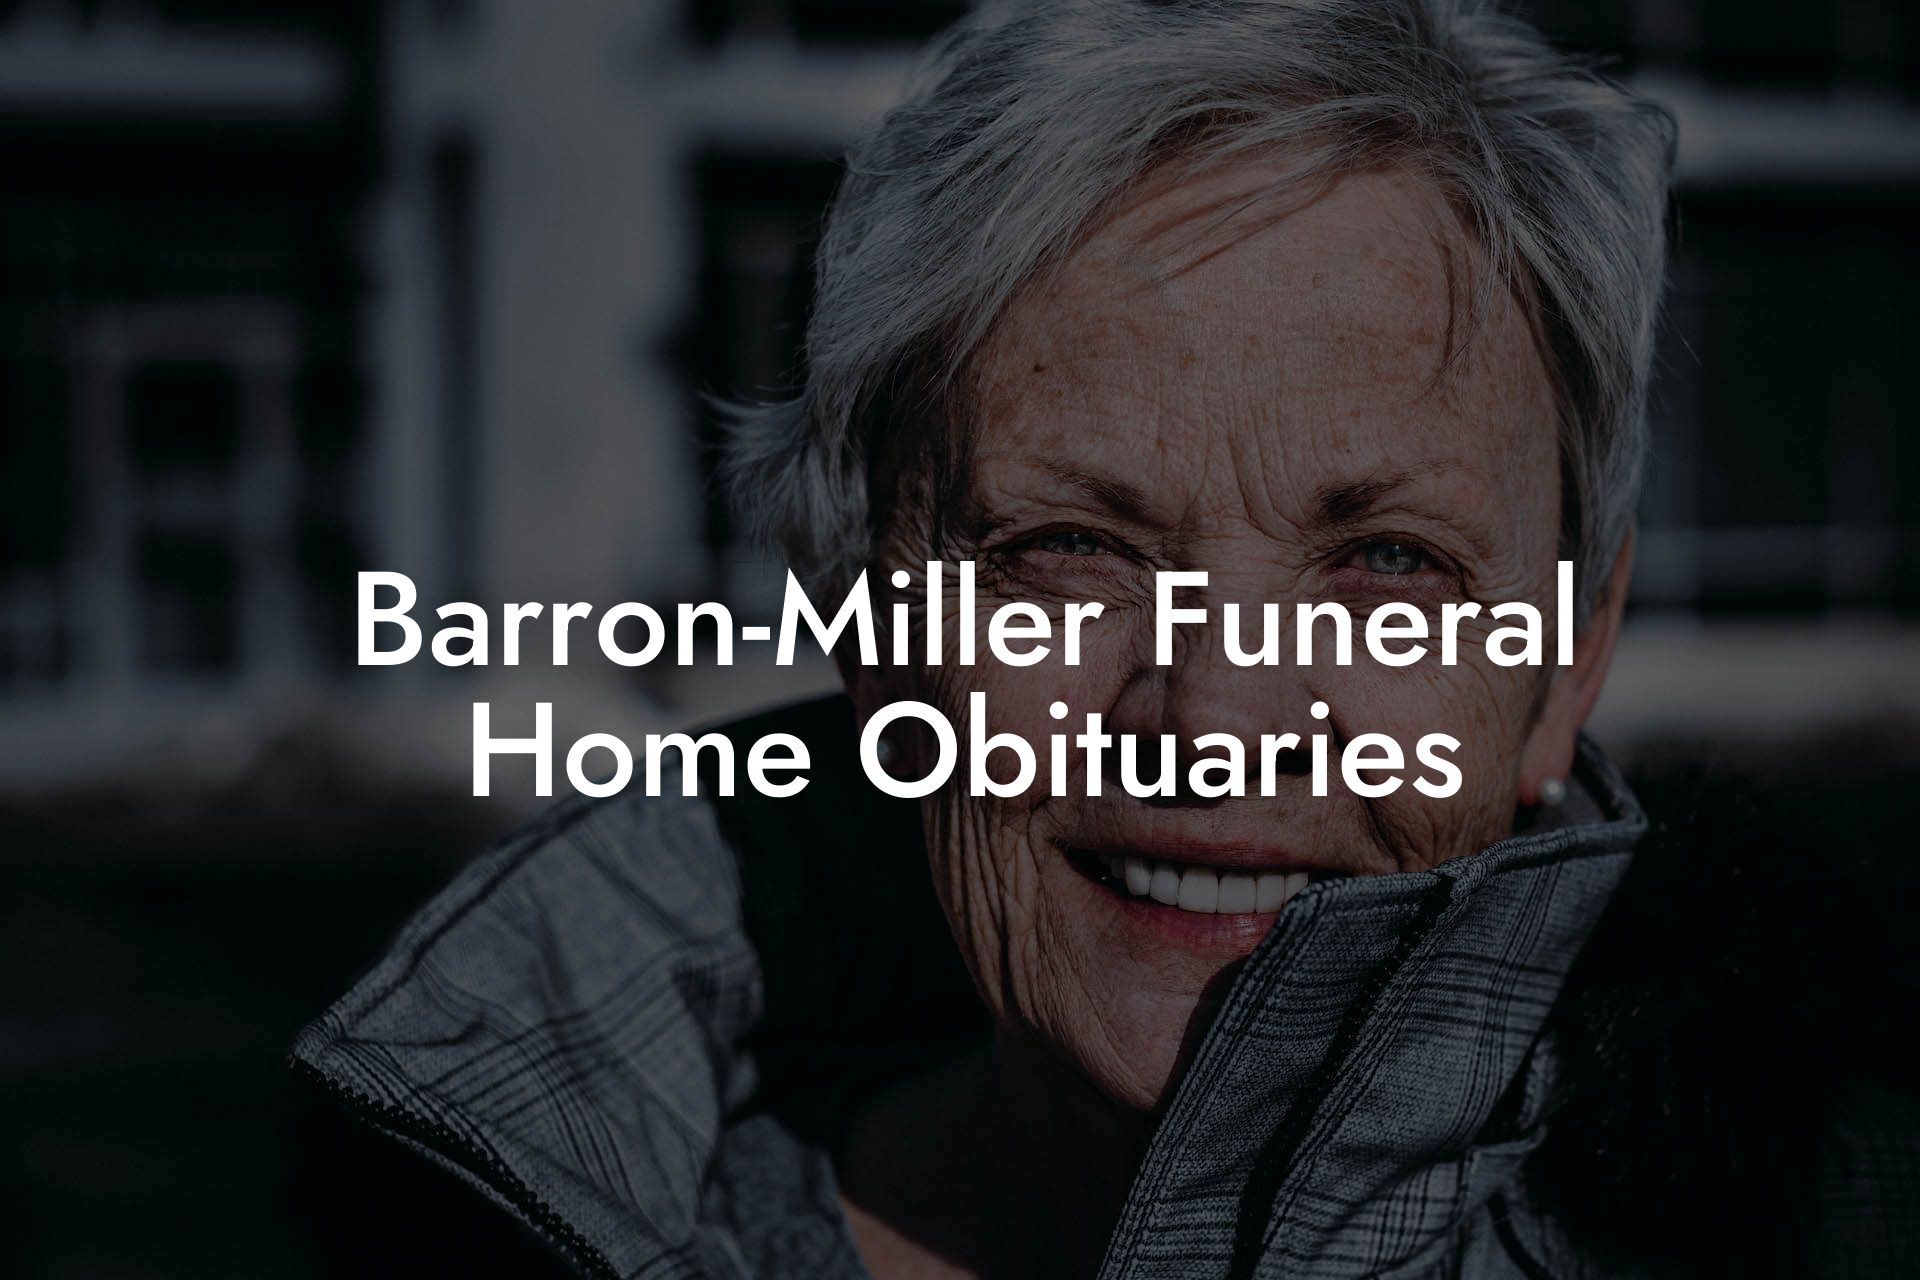 Barron-Miller Funeral Home Obituaries